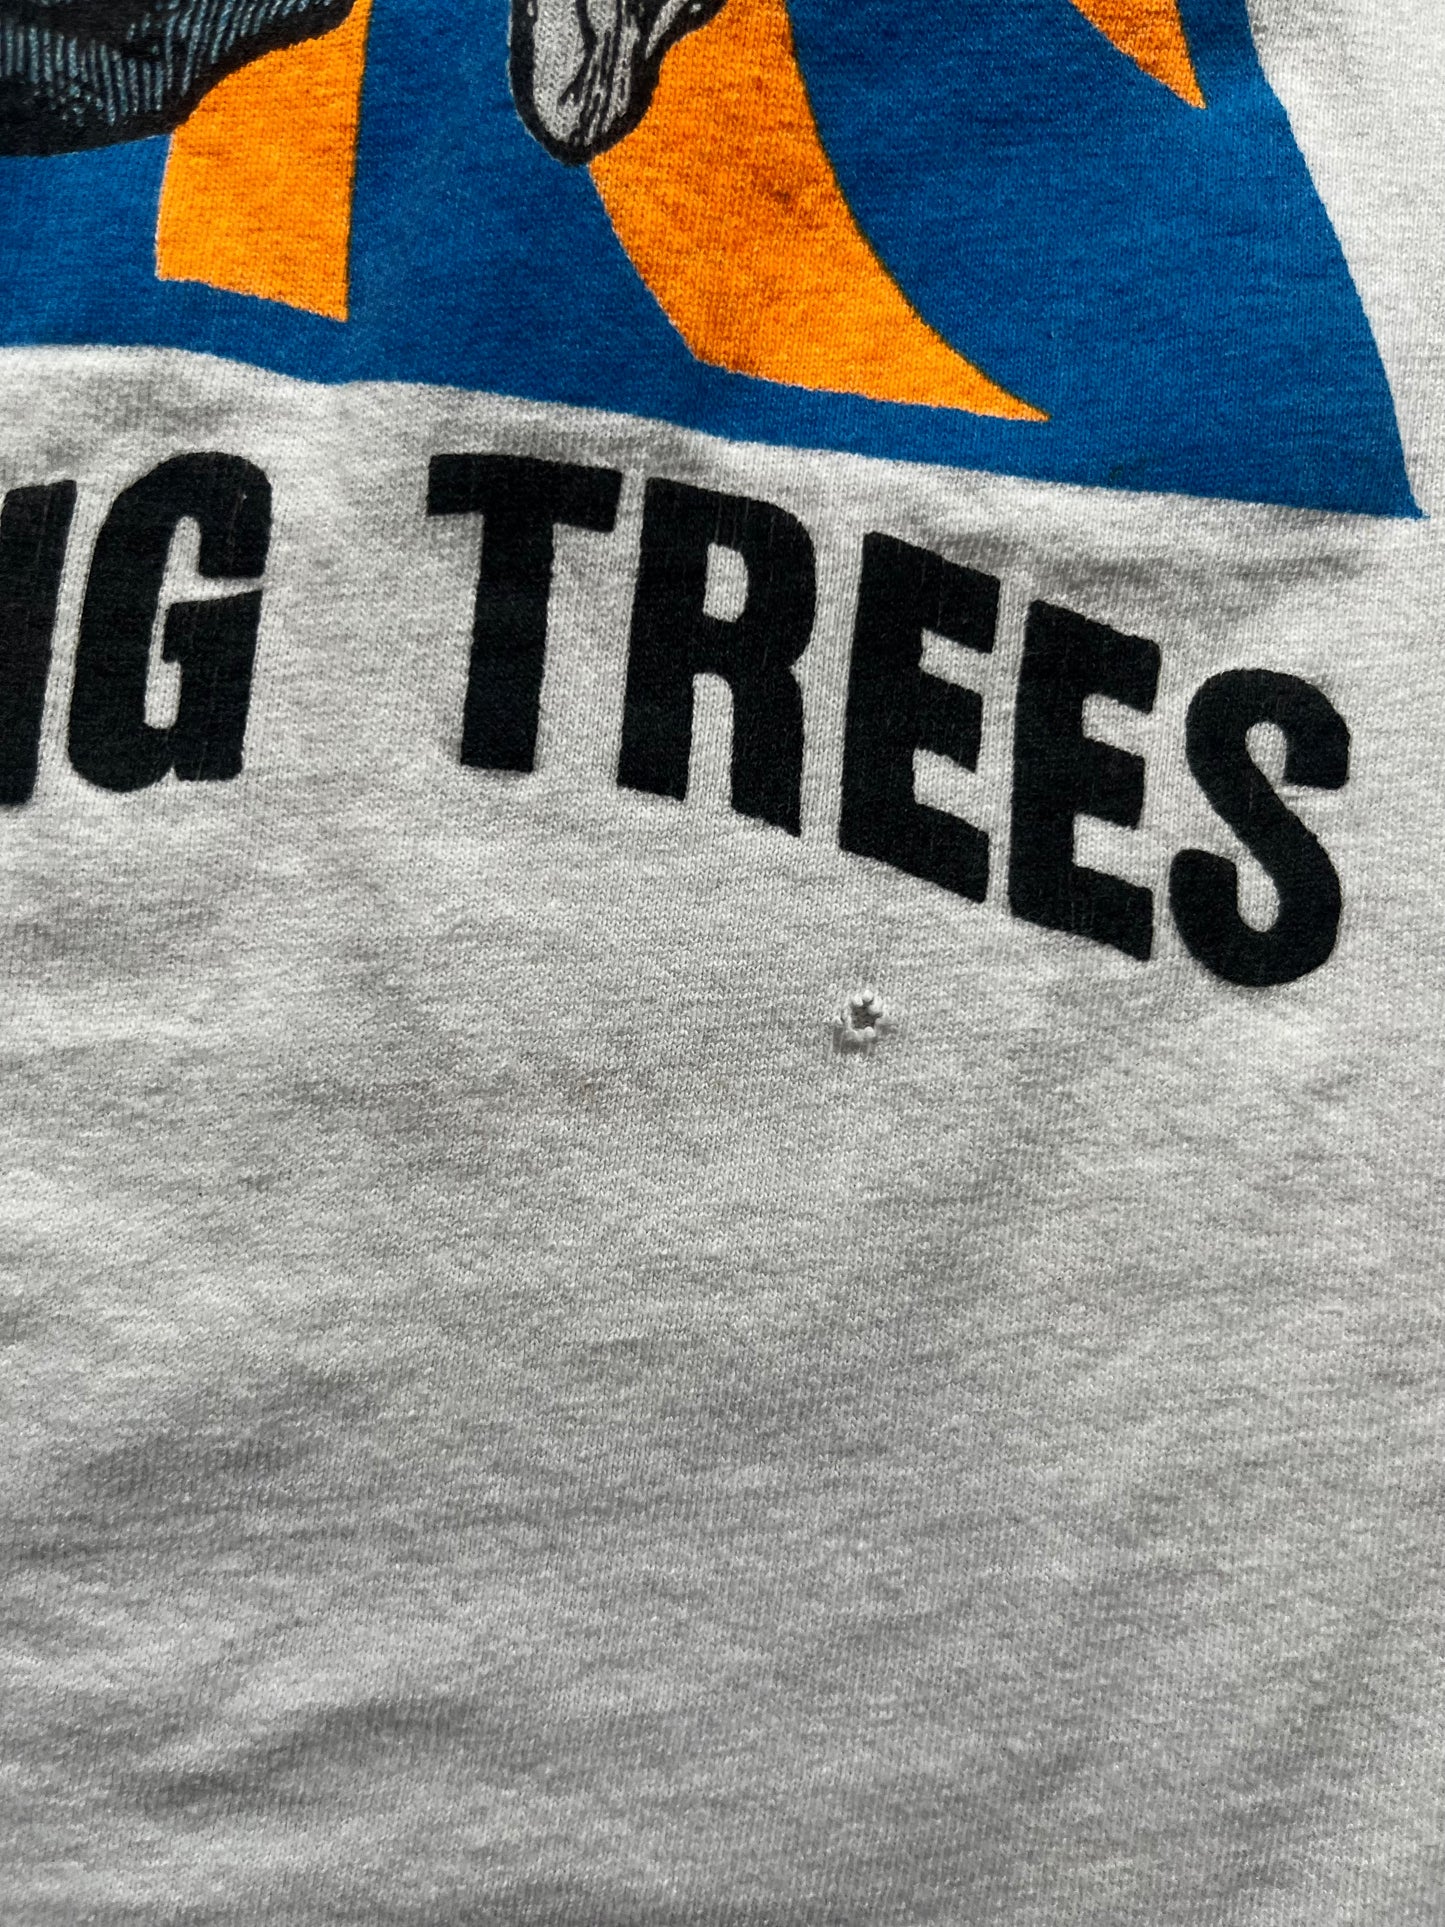 80/90s Screaming Trees Tee